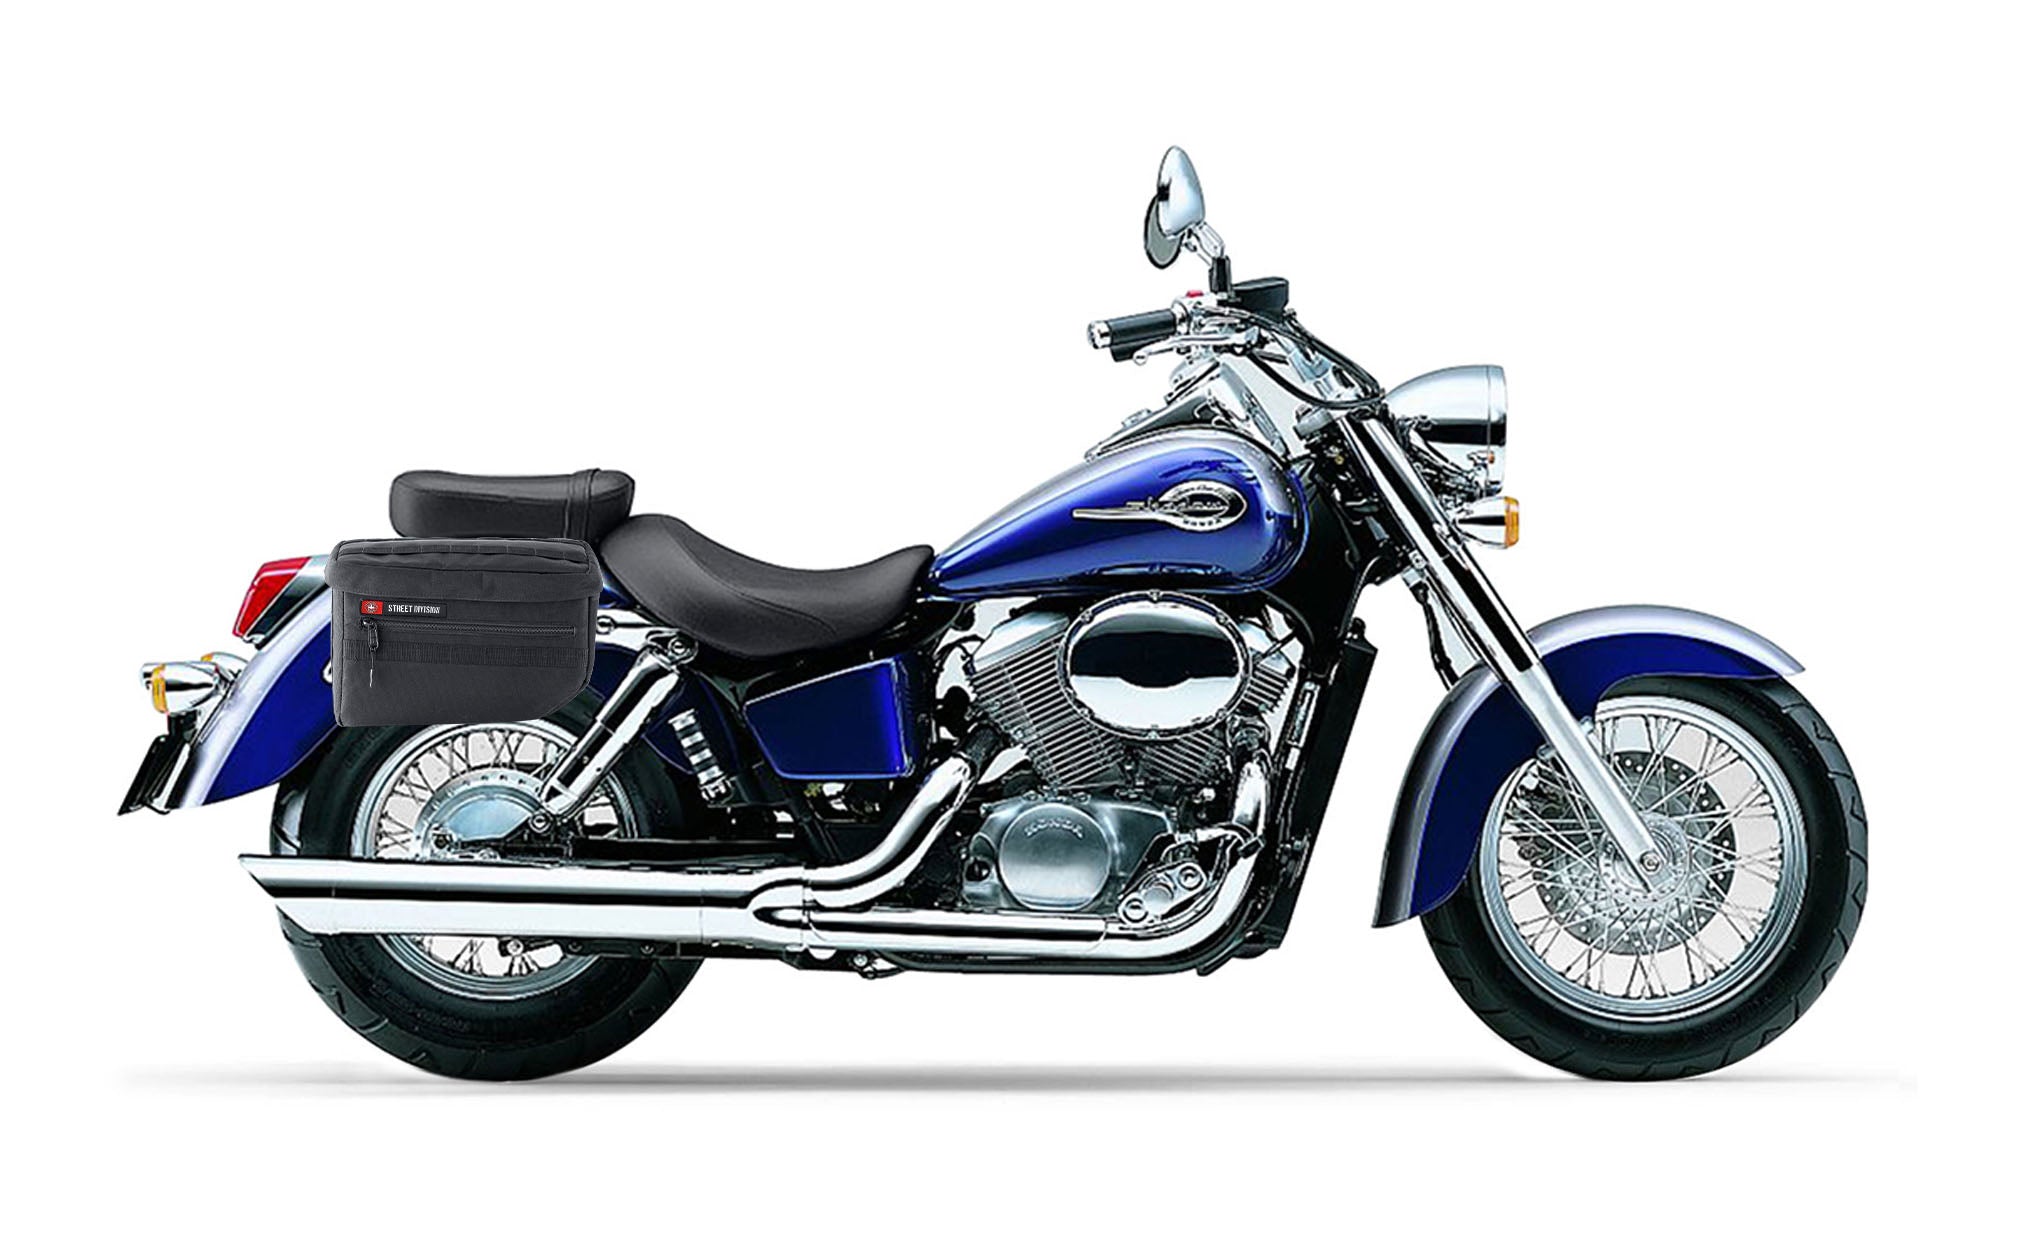 Viking Patriot Large Honda Shadow 750 Ace Motorcycle Throw Over Saddlebags on Bike Photo @expand